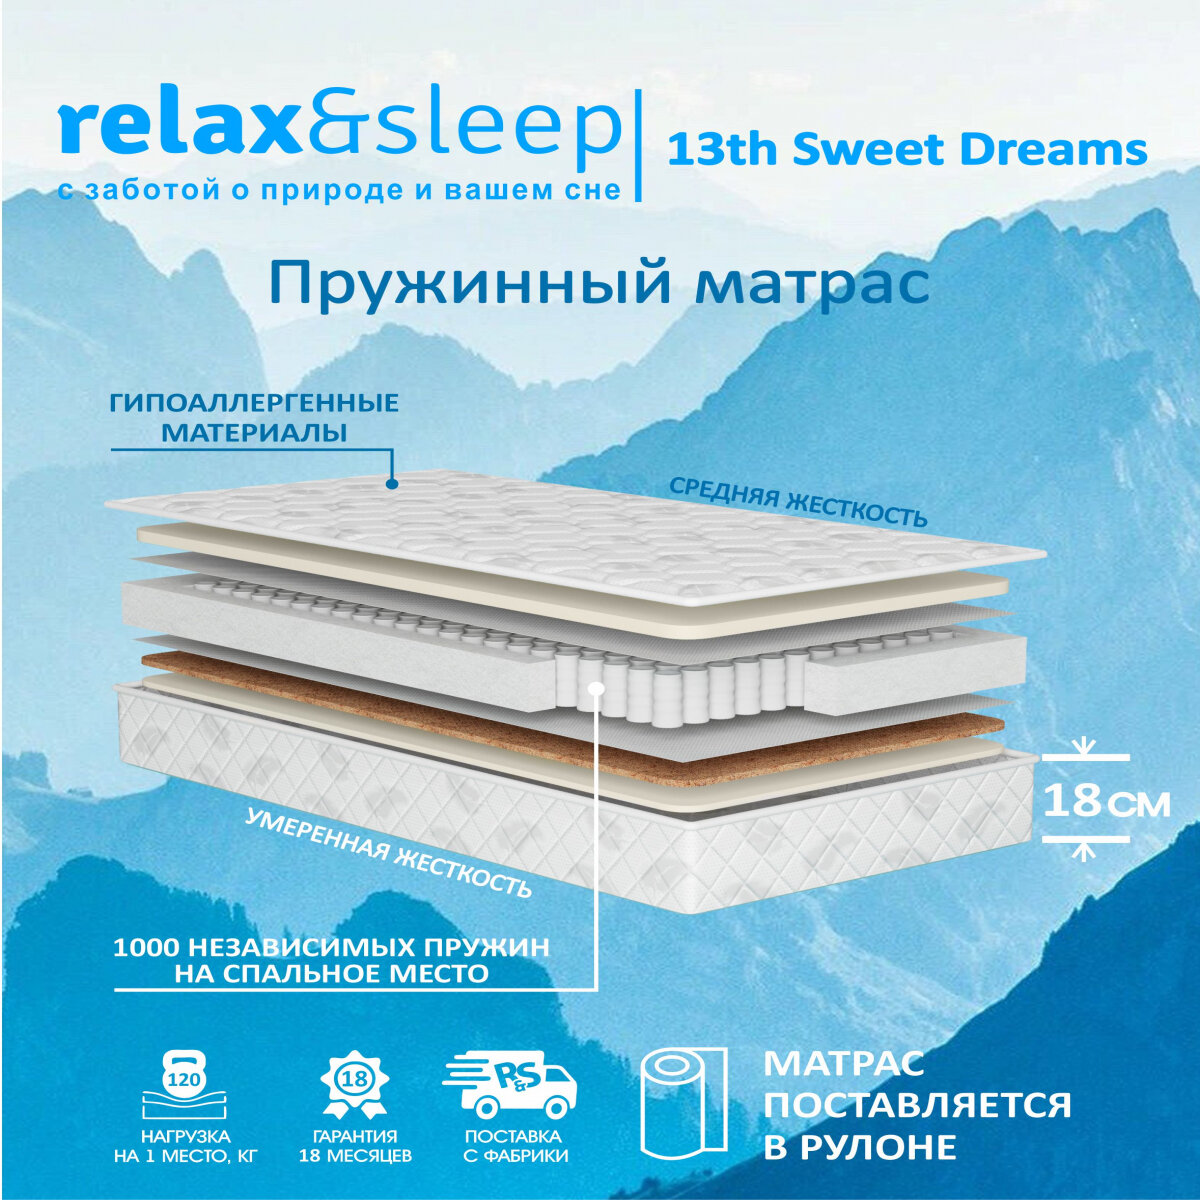 Матрас Relax&Sleep ортопедический пружинный 13th Sweet Dreams (60 / 195)